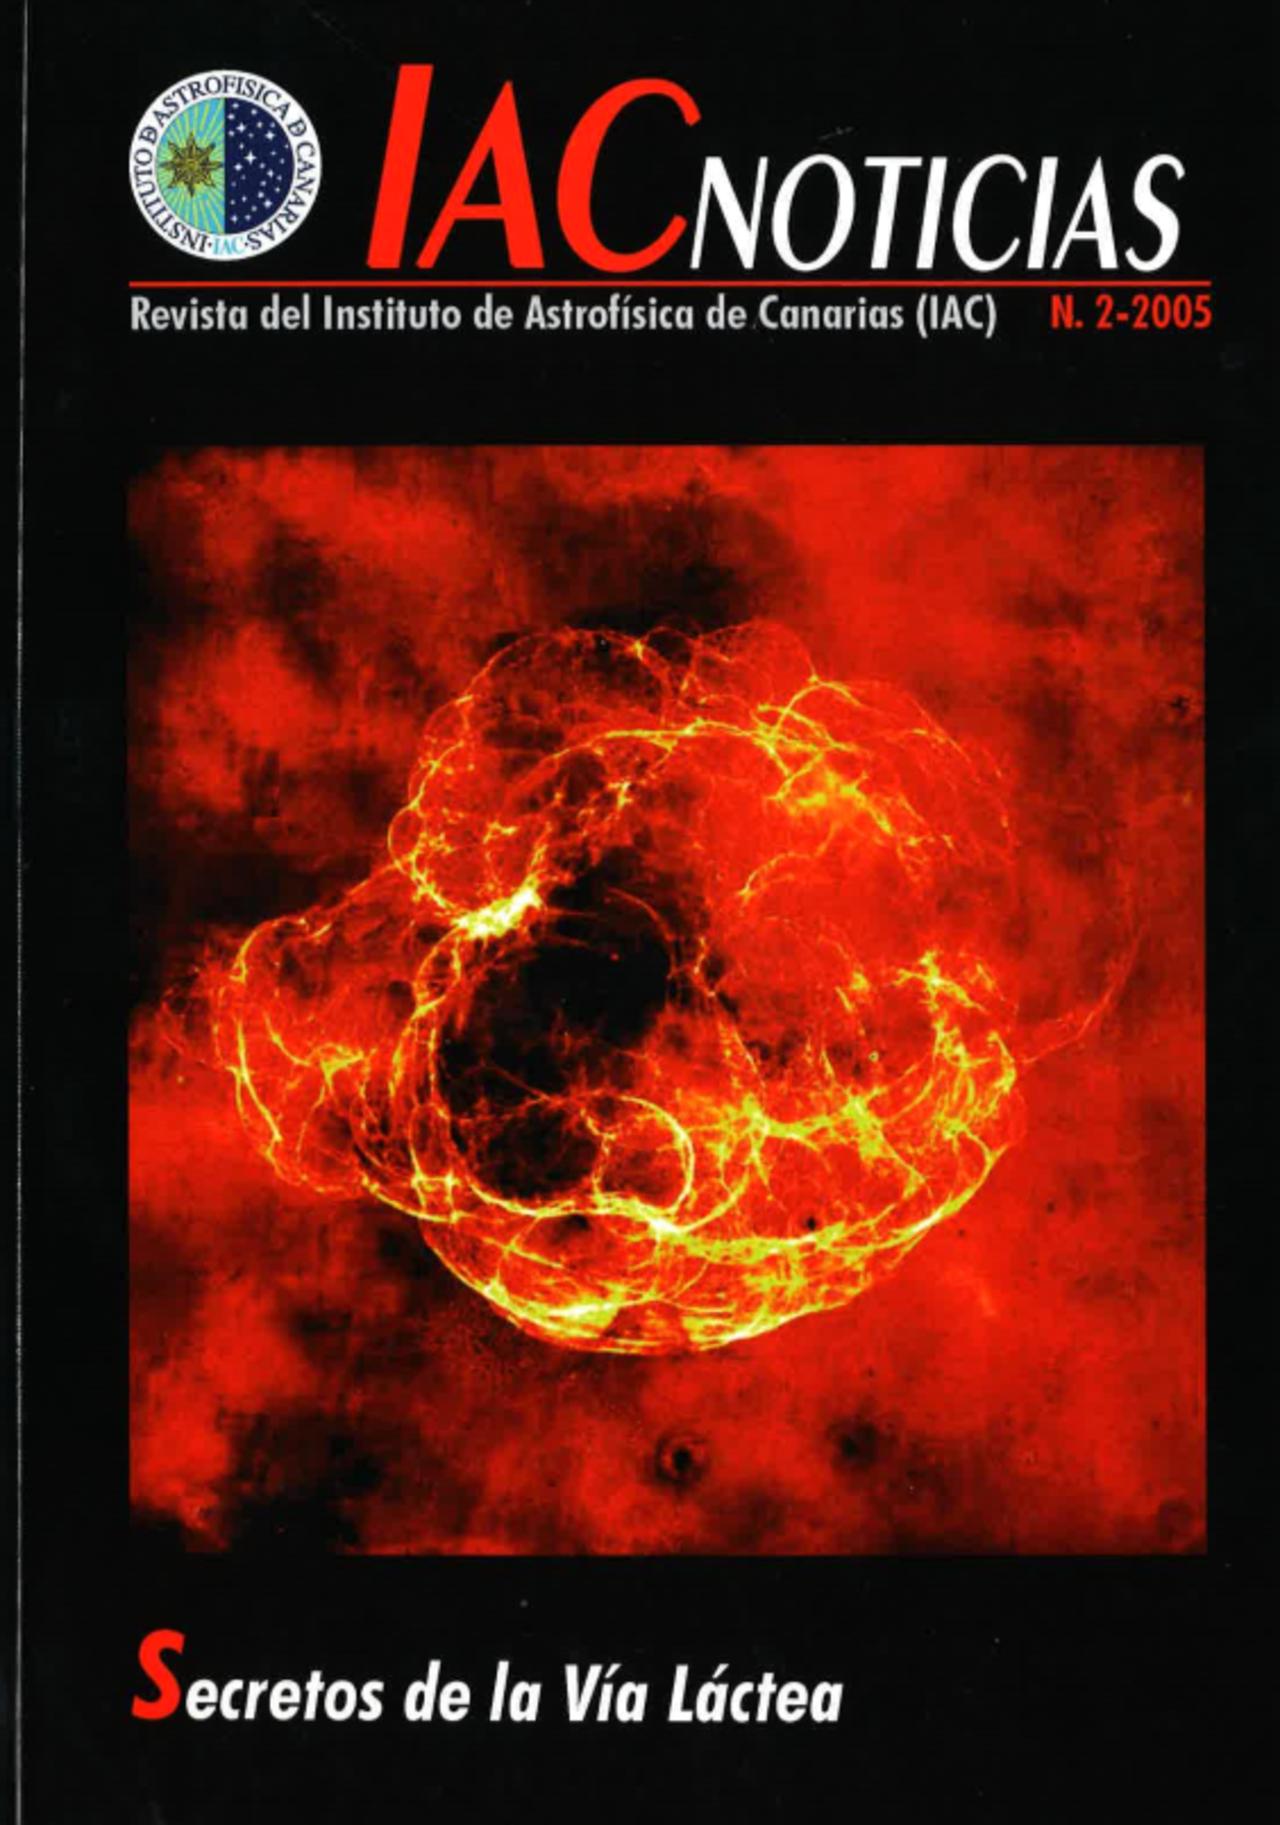 IAC News "Secrets of the Milky Way", 2-2005